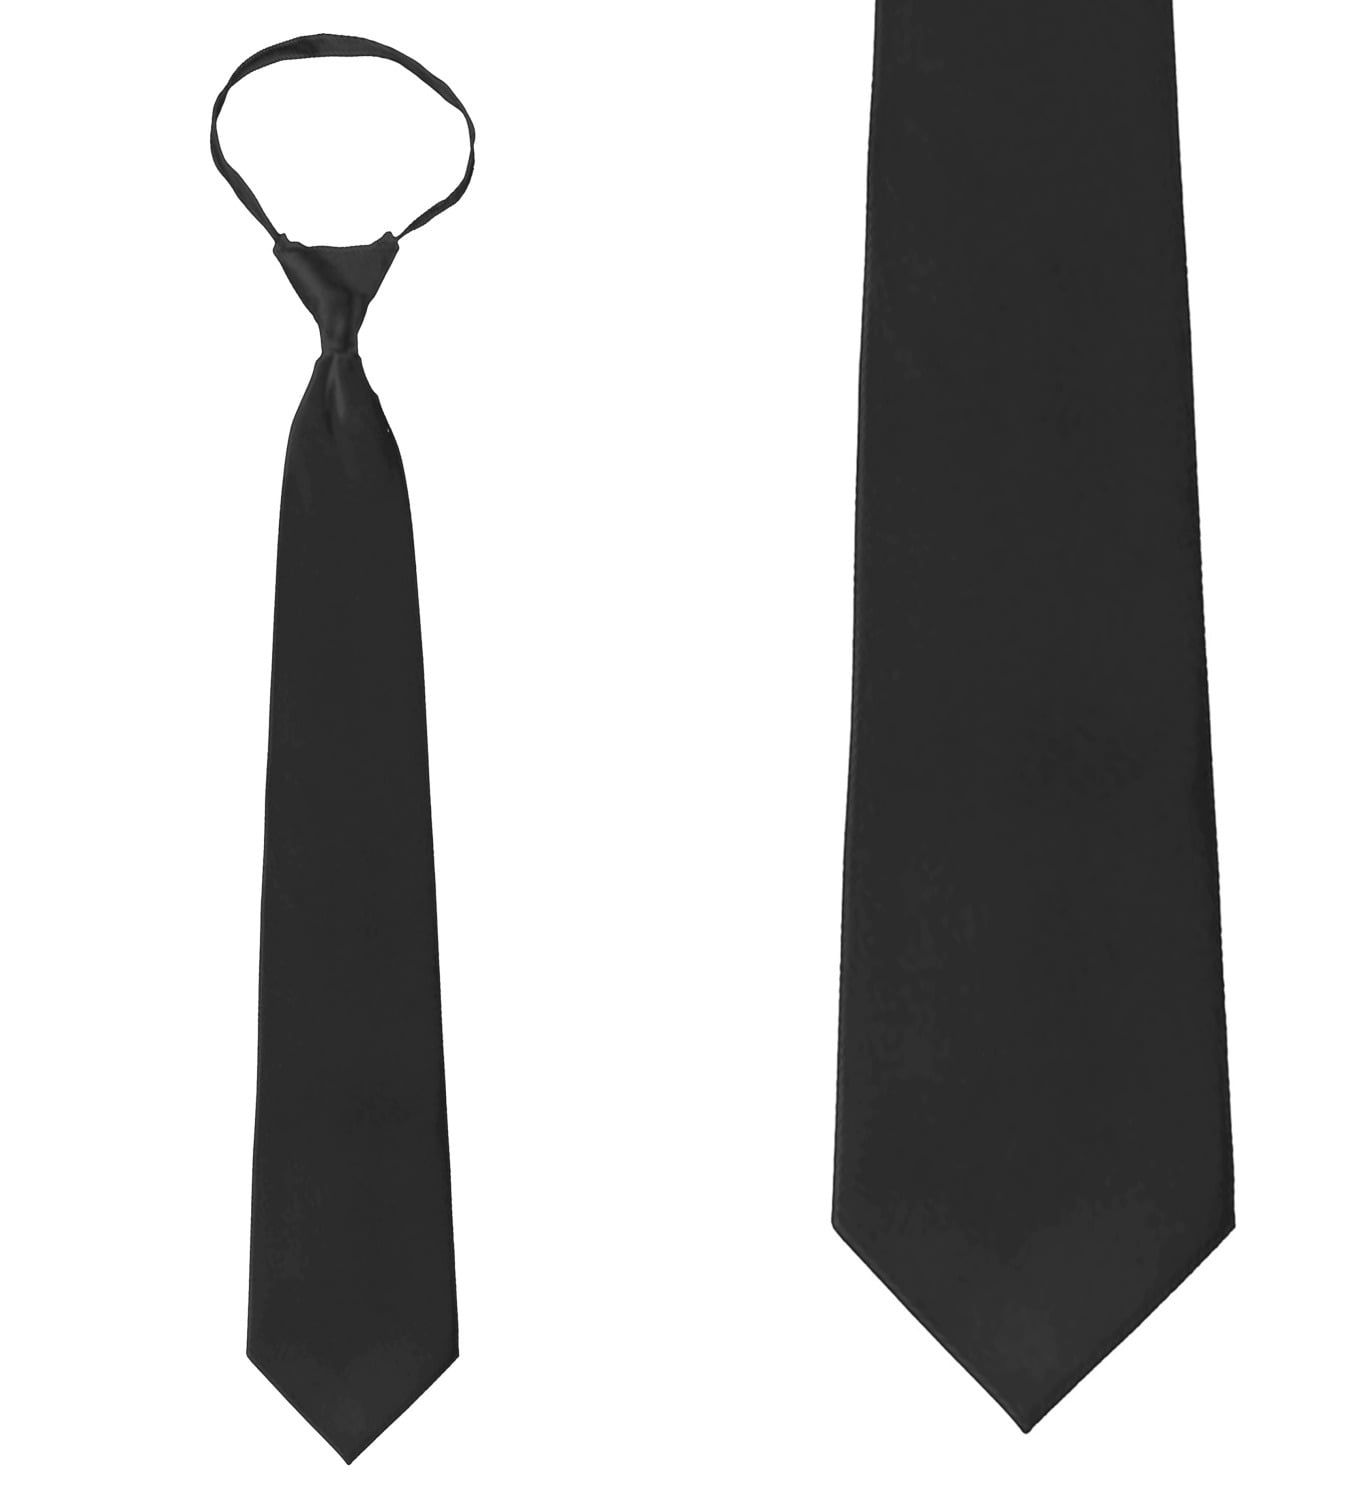 New The Best Men Solid BLACK Formal Work Business Wedding Party Necktie Neck Tie 